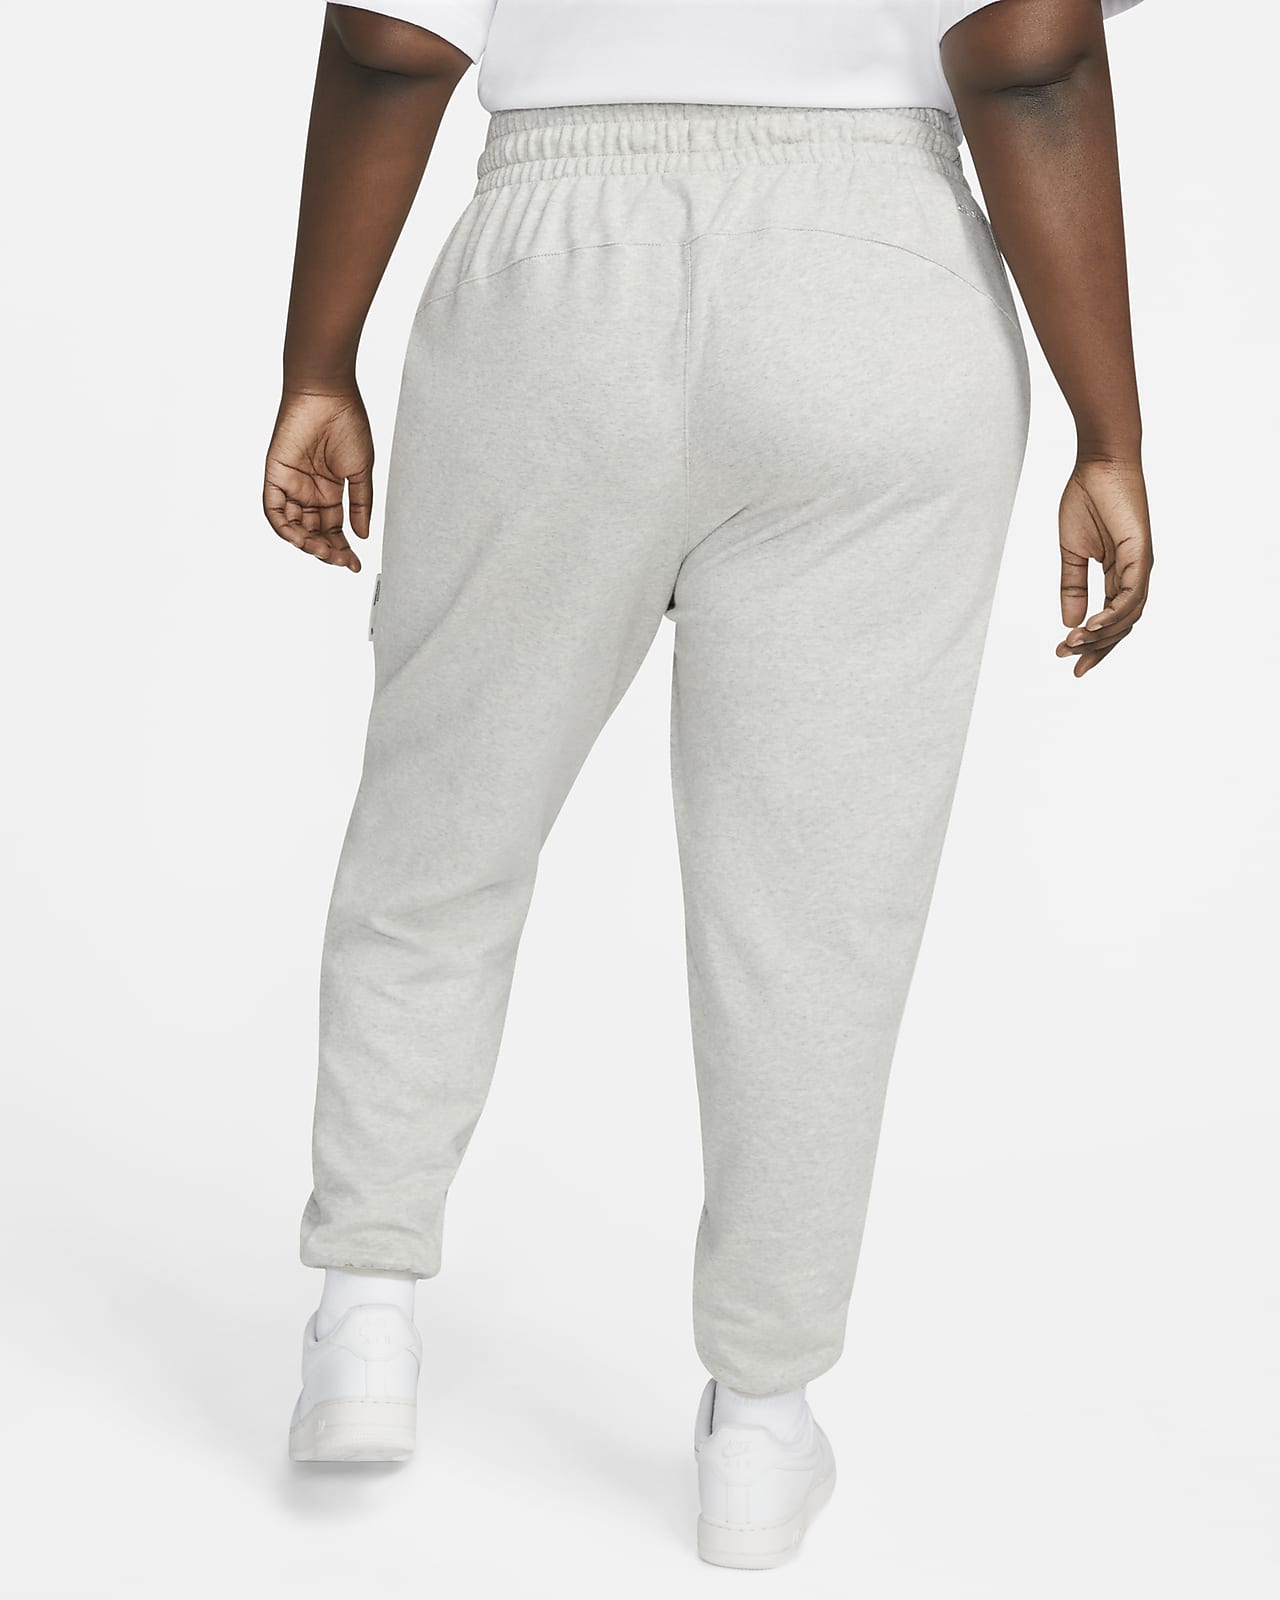 Nike Swoosh Standard Issue Women's Basketball Pants (Plus Nike.com